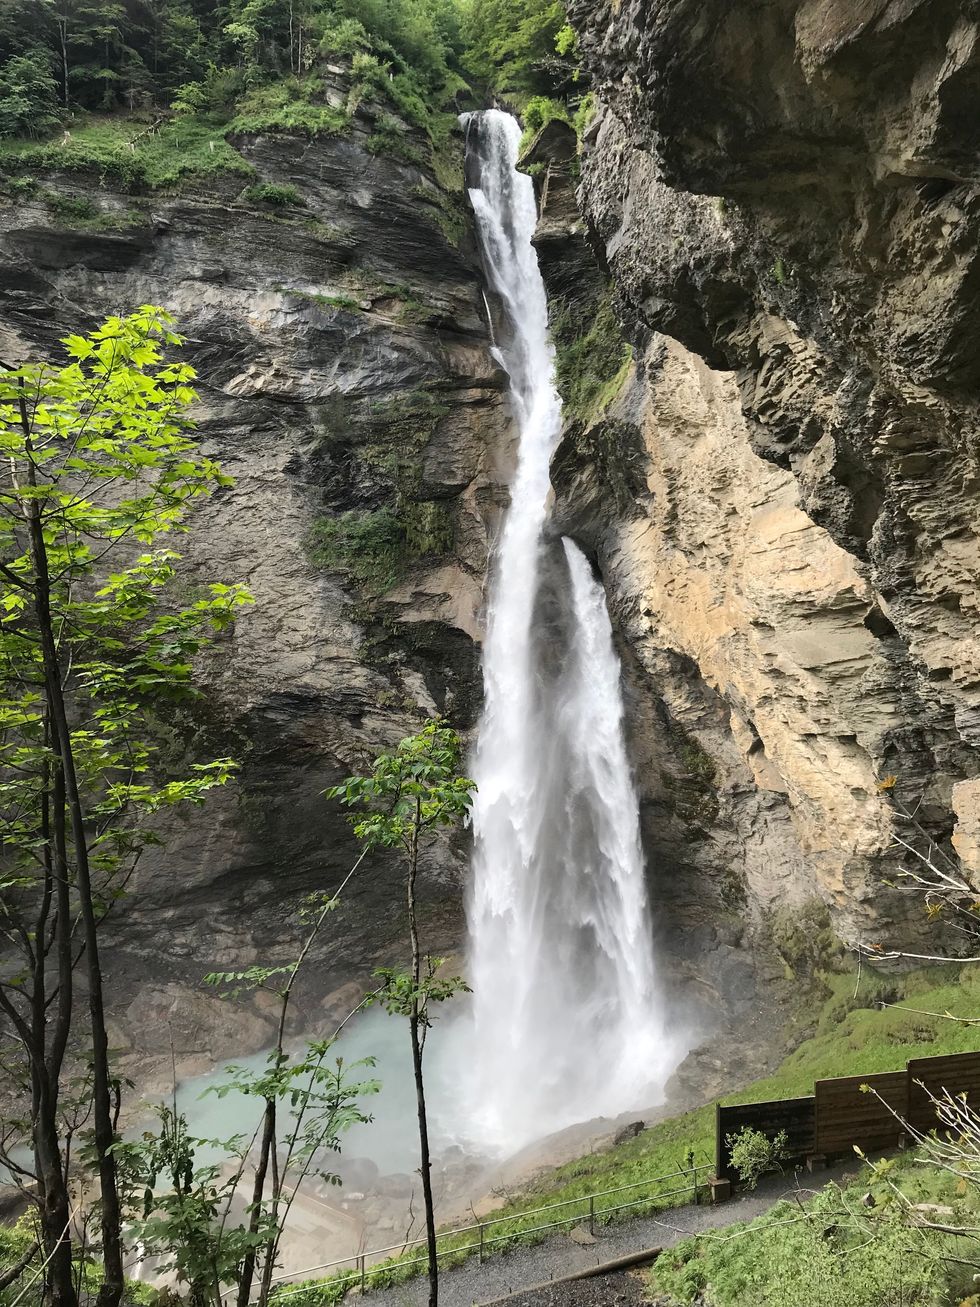 De 120 meter hoge indrukwekkende Reichenbachfall